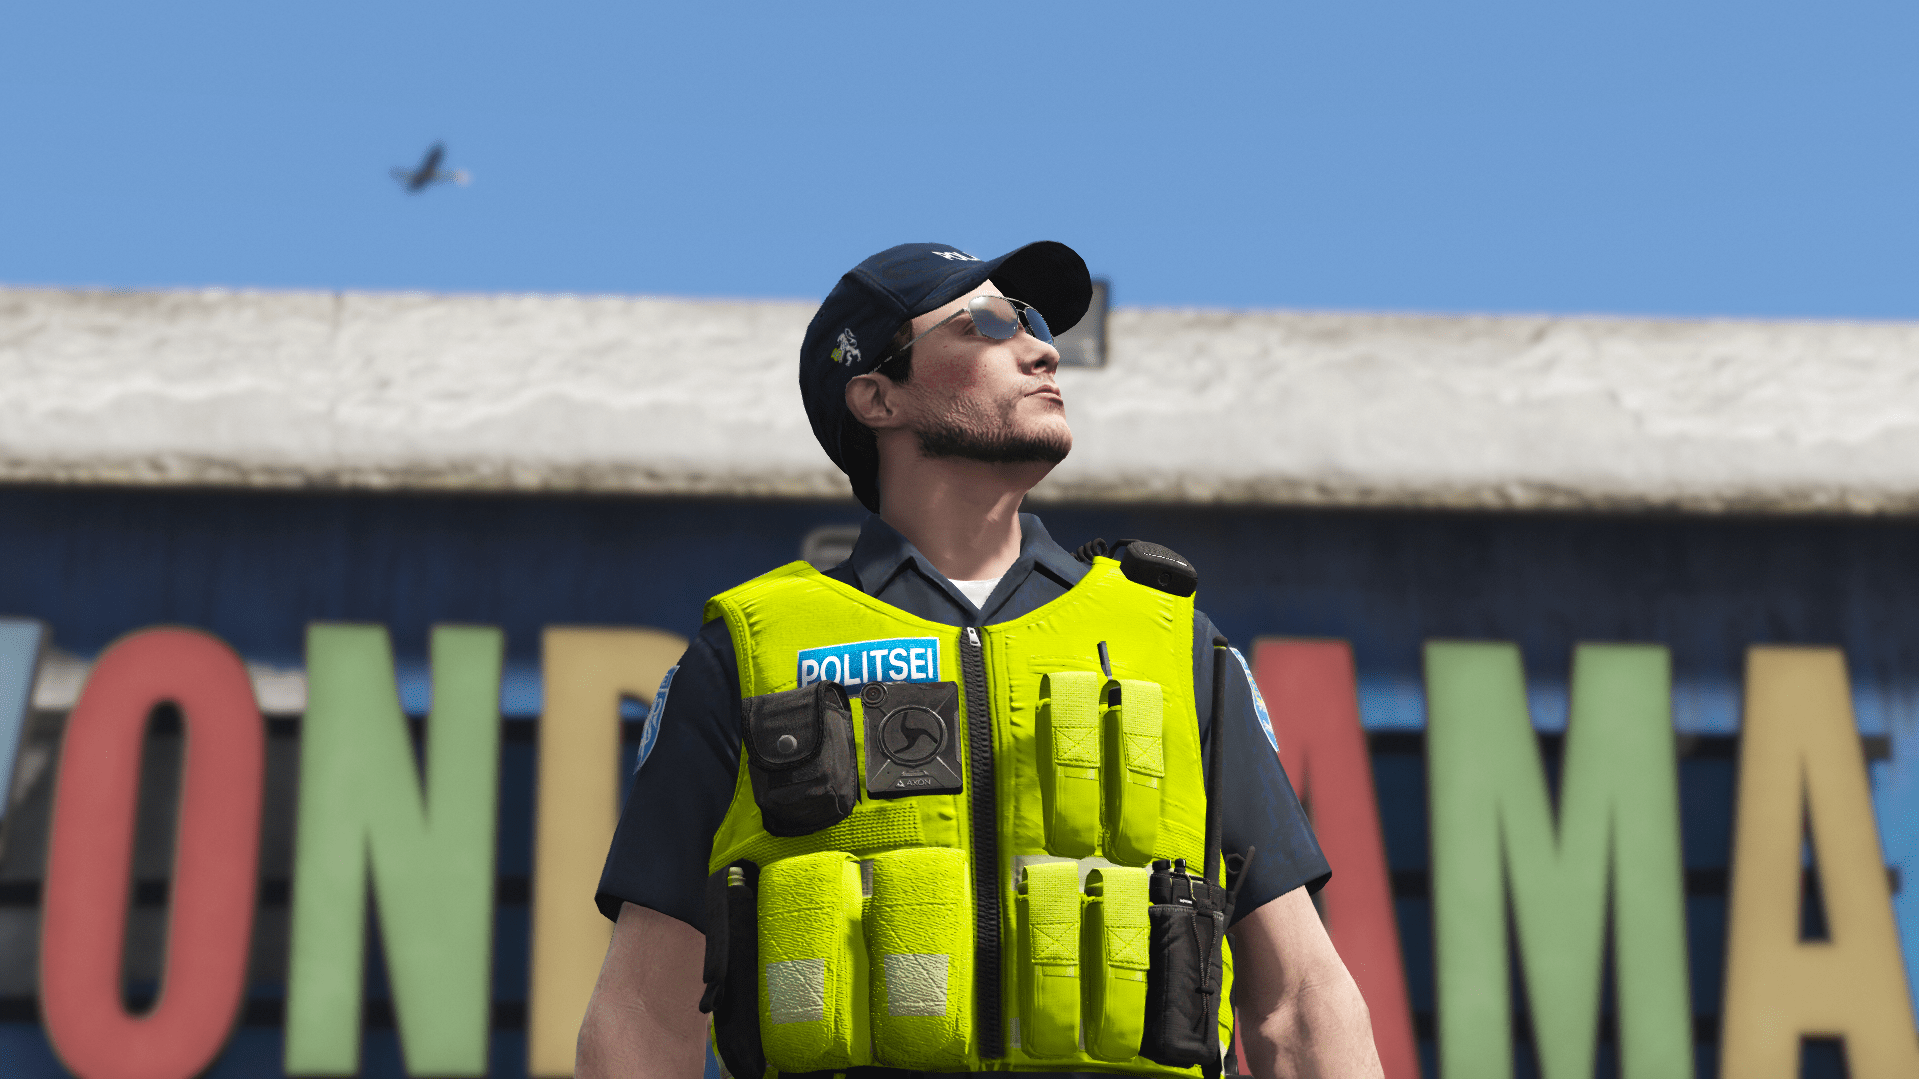 Police uniform in gta 5 фото 36